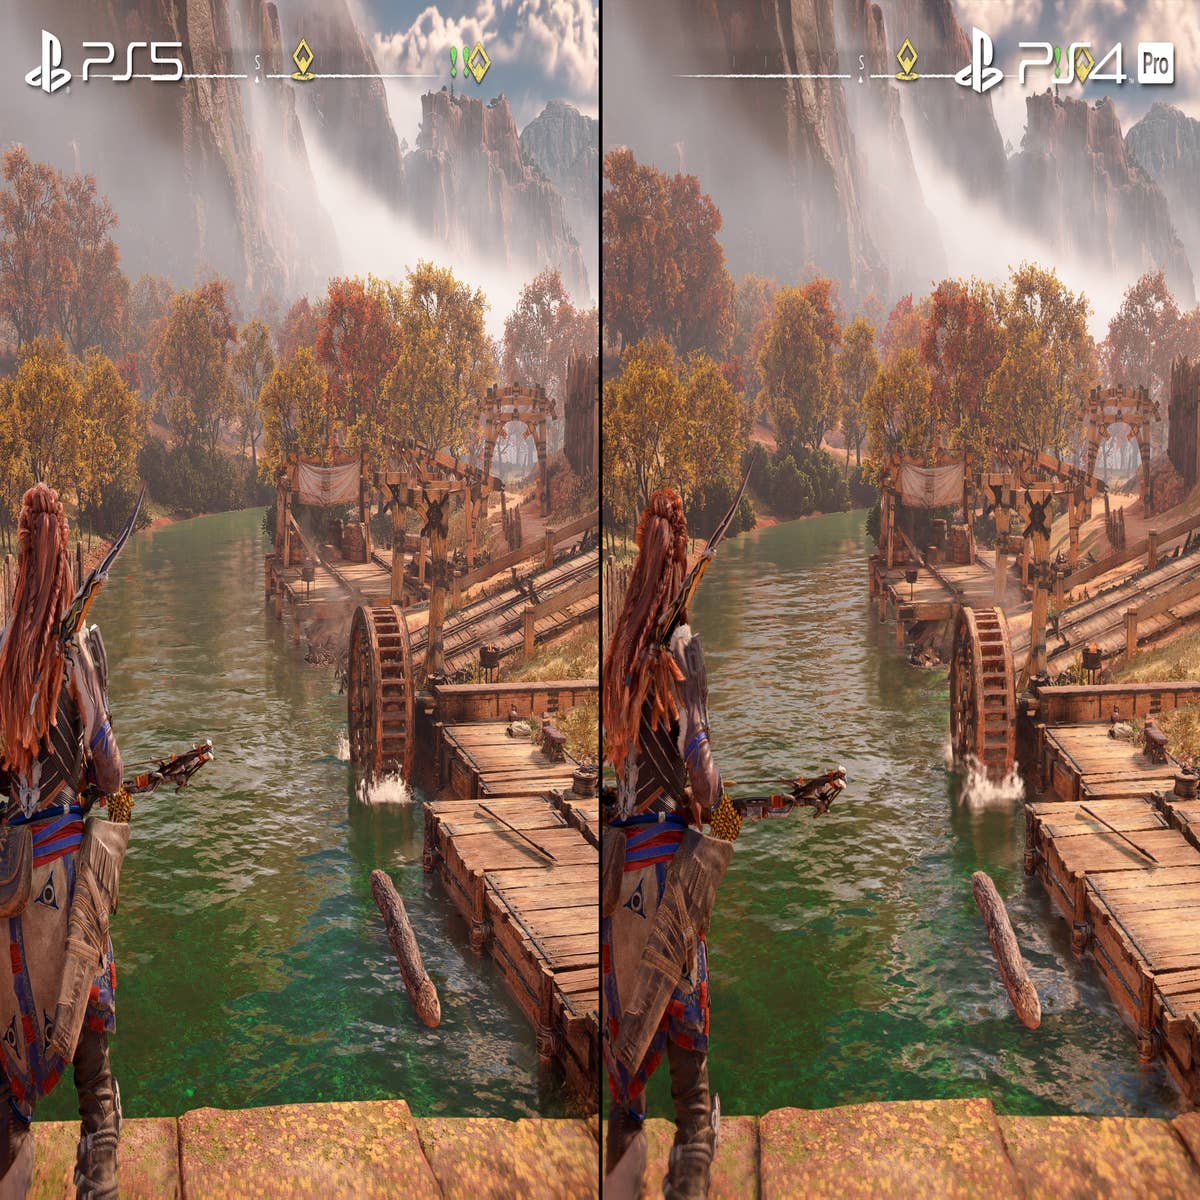 Horizon Forbidden West - PS4 & PS5 key